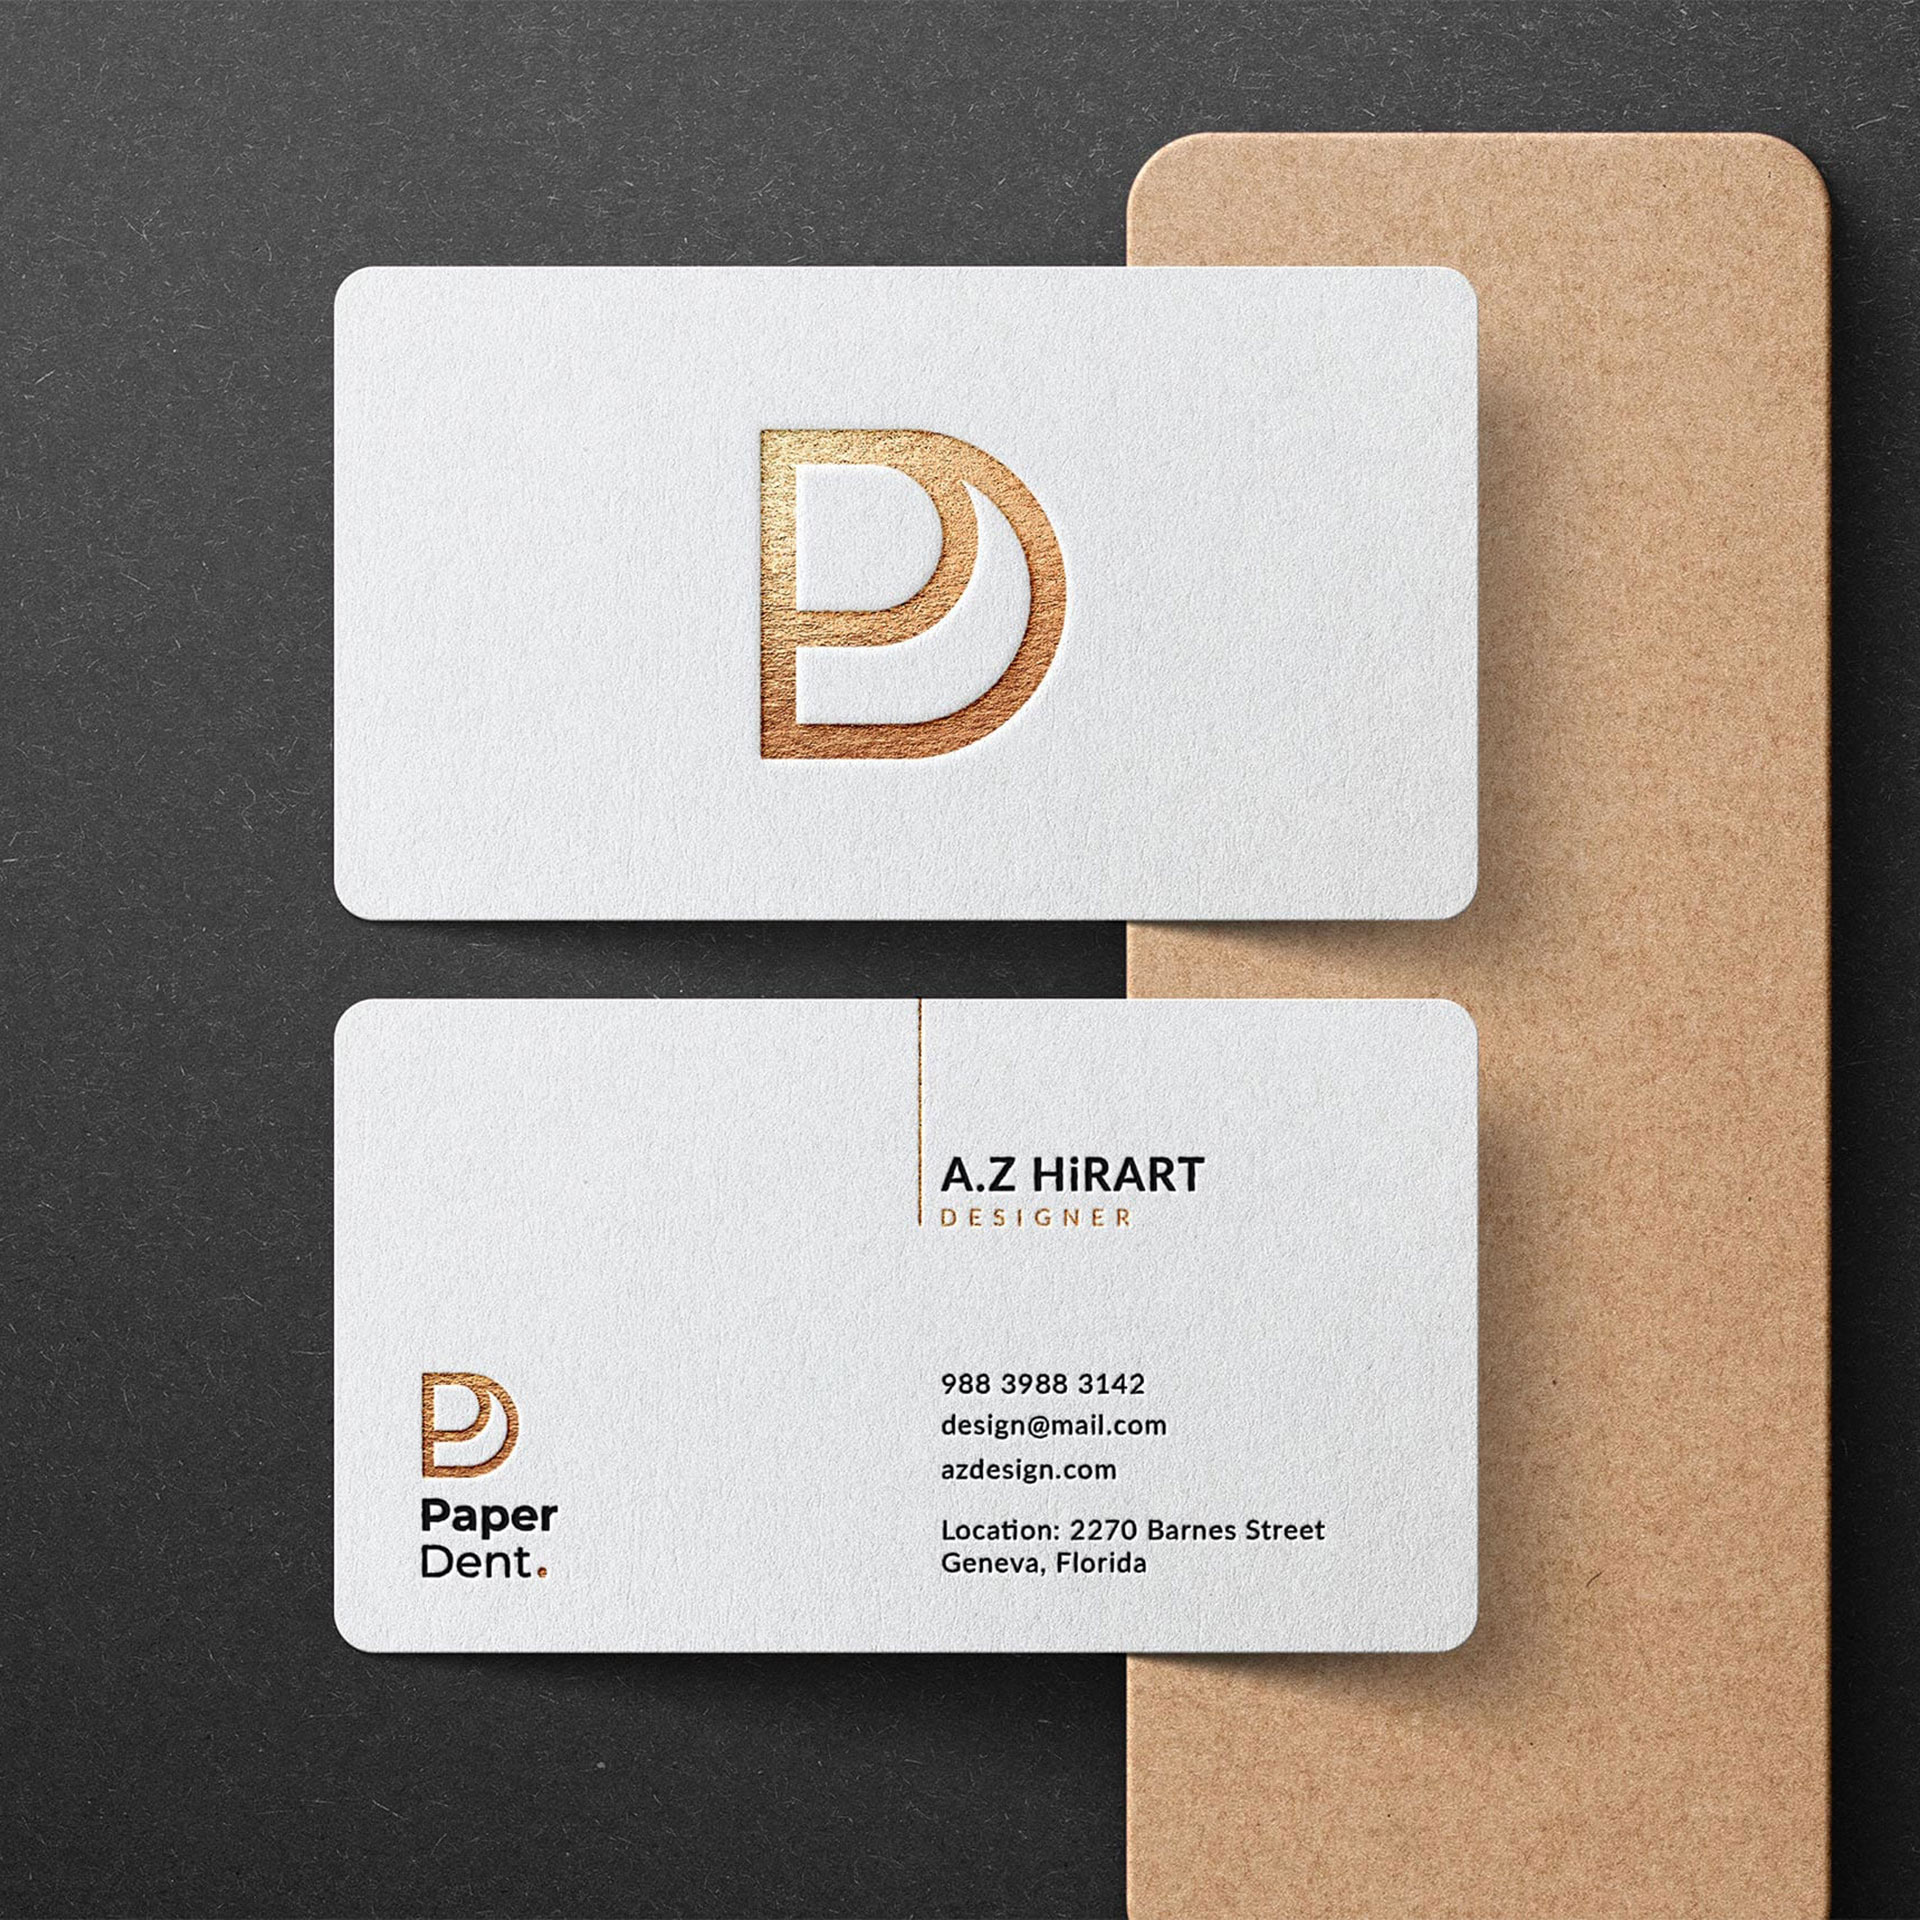 I will design your luxury minimalist business card